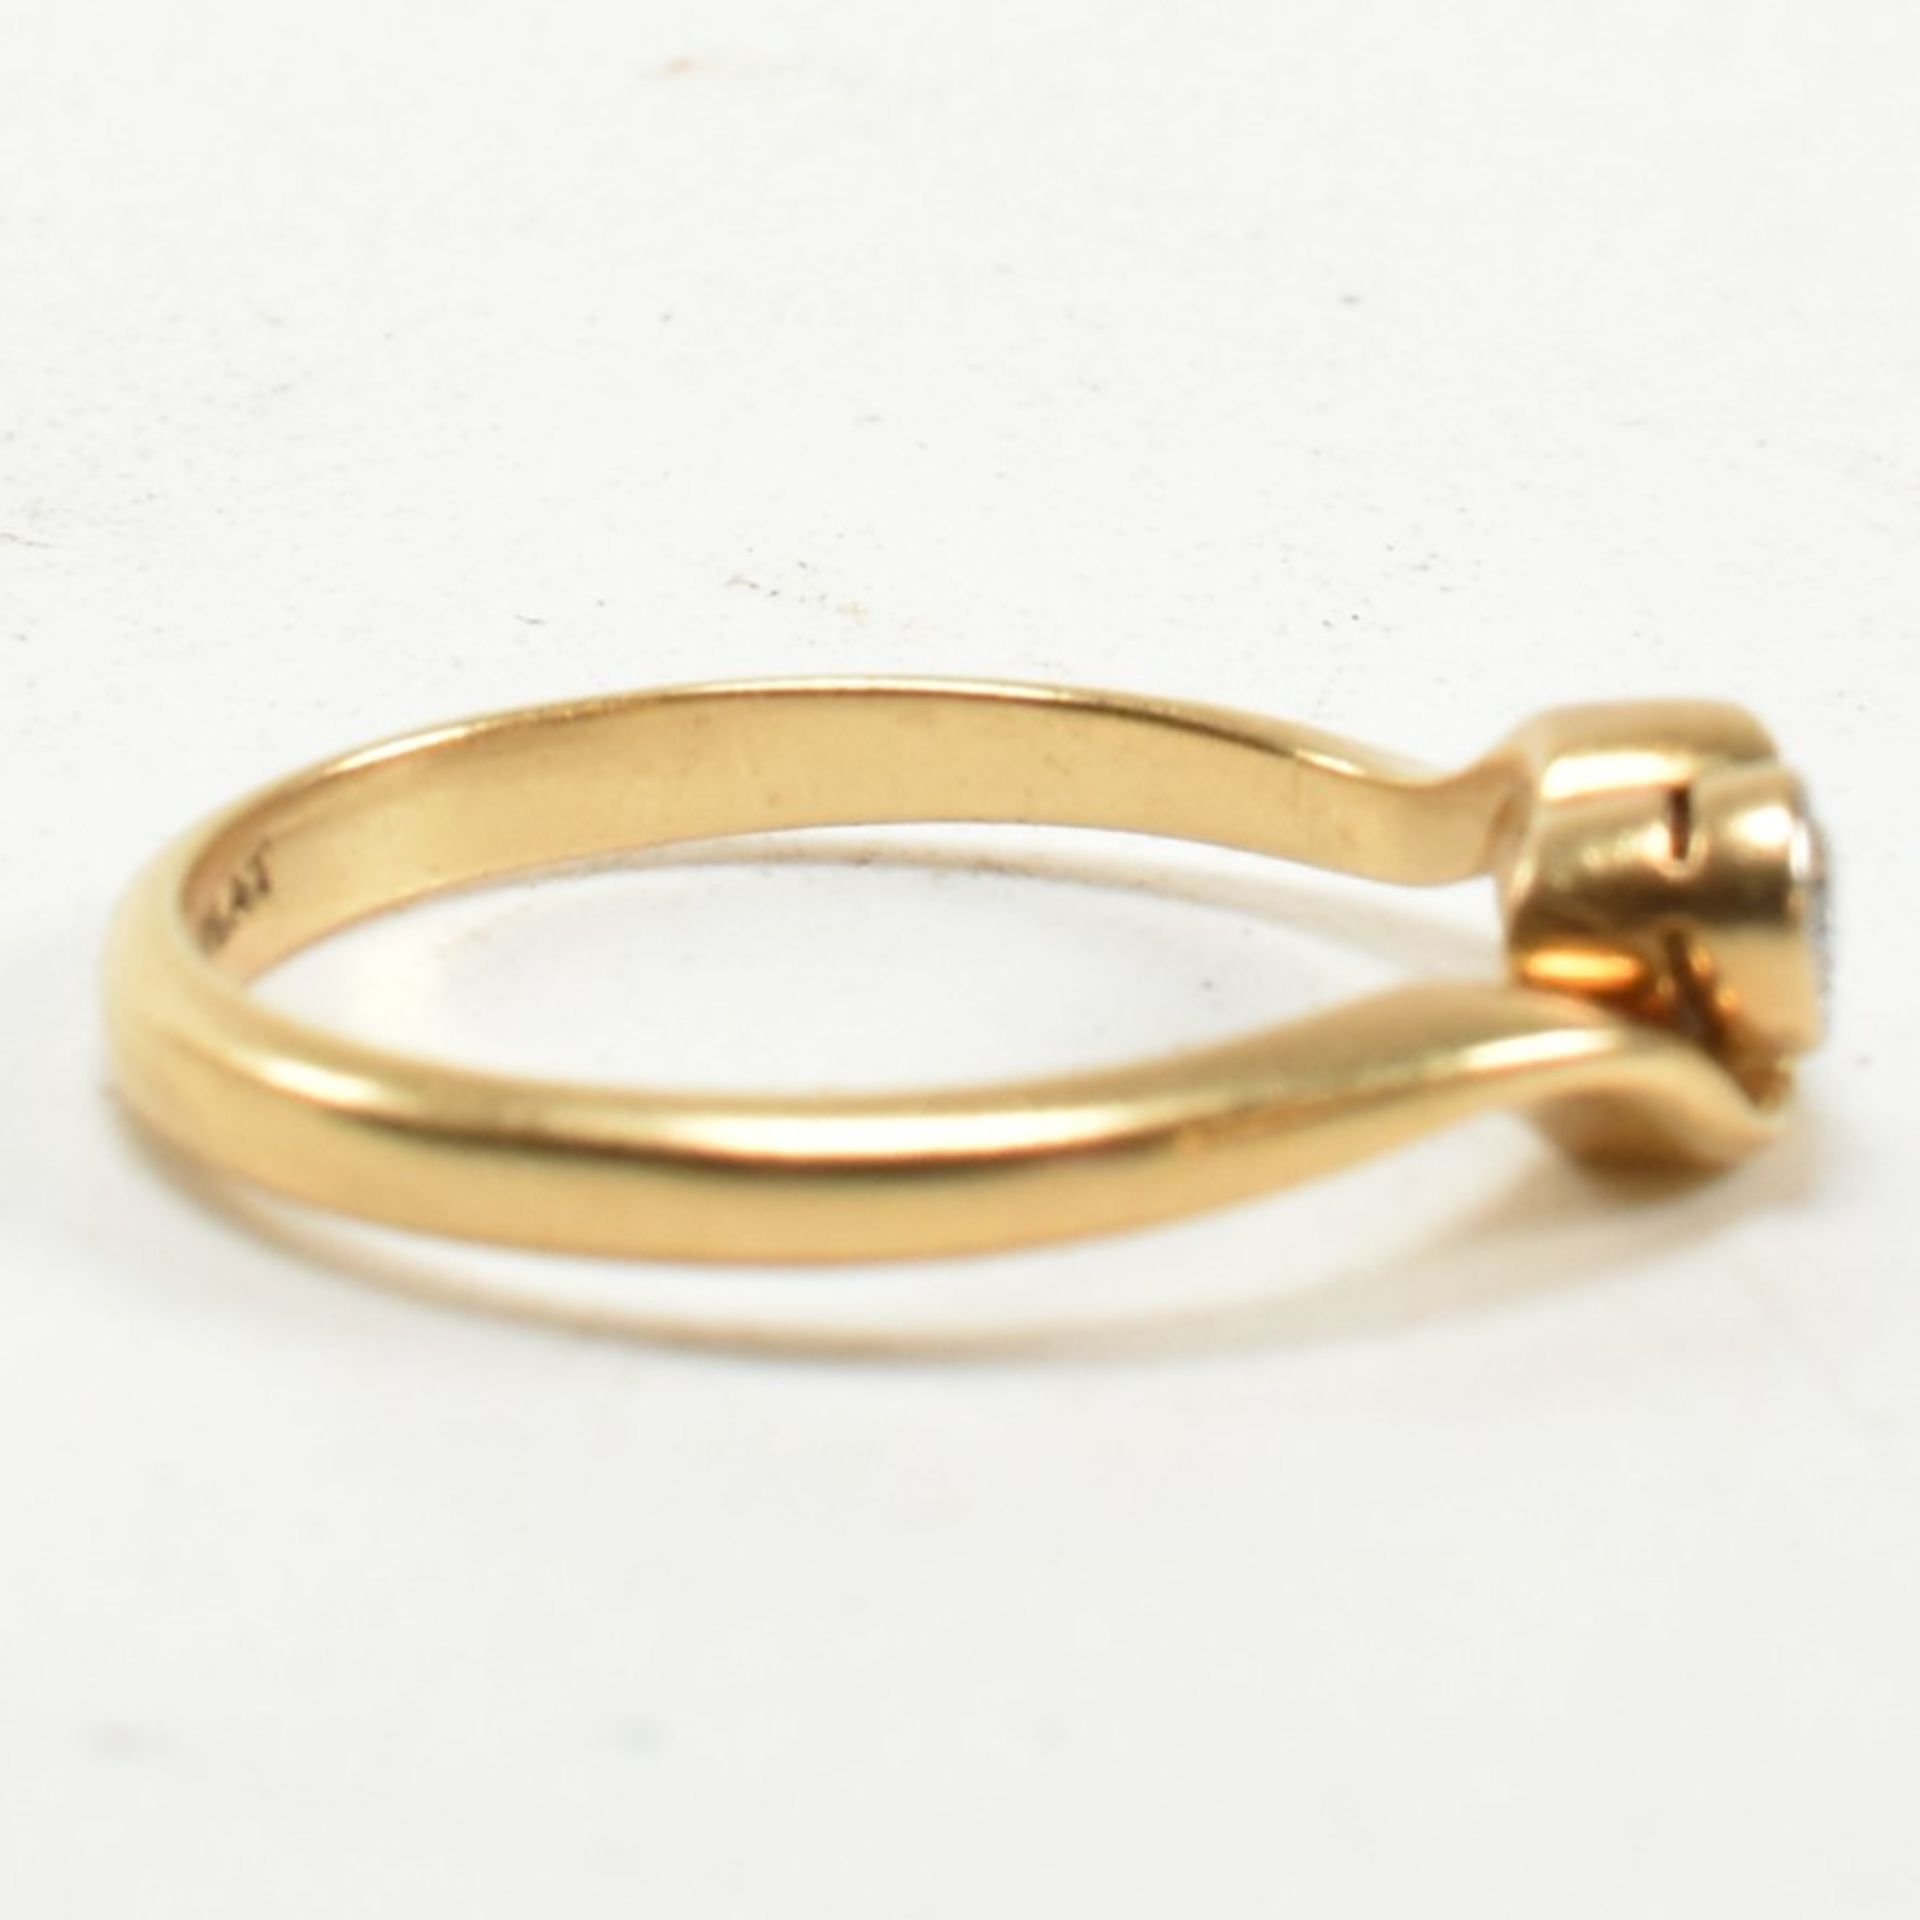 CASED 18CT GOLD PLATINUM & DIAMOND CROSSOVER RING - Image 6 of 8